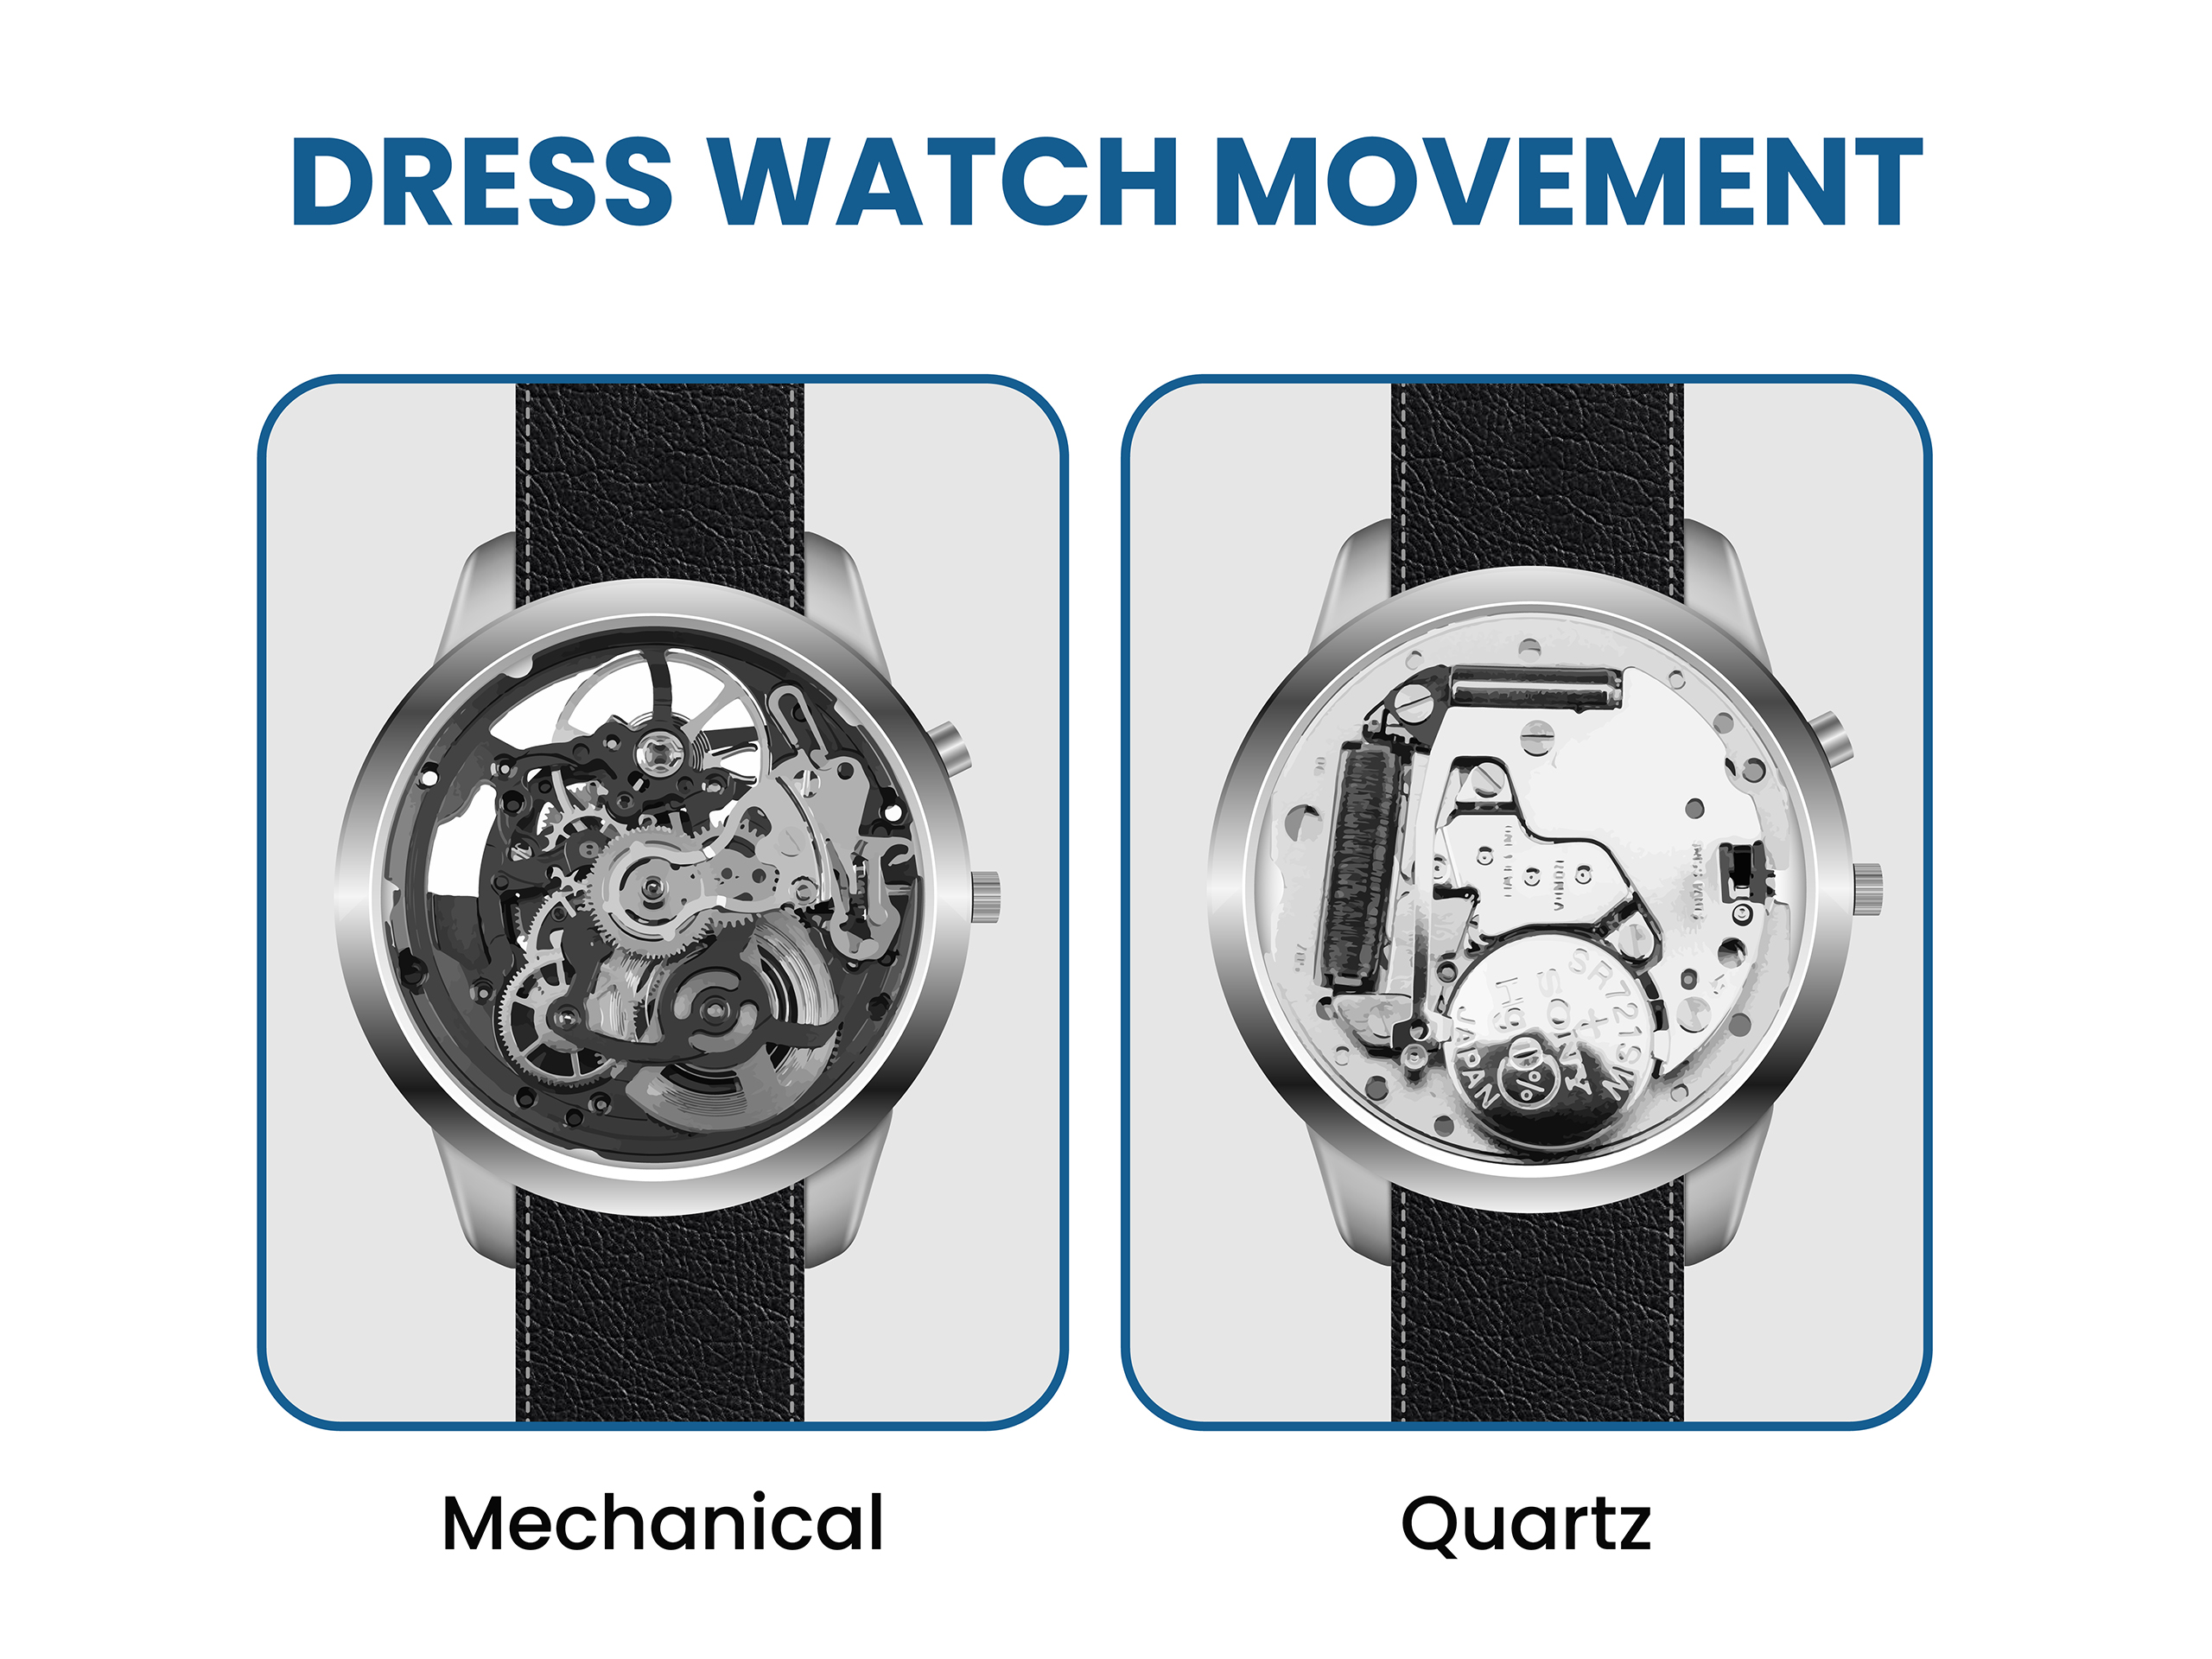 dress watch movement types: mechanical vs. quartz